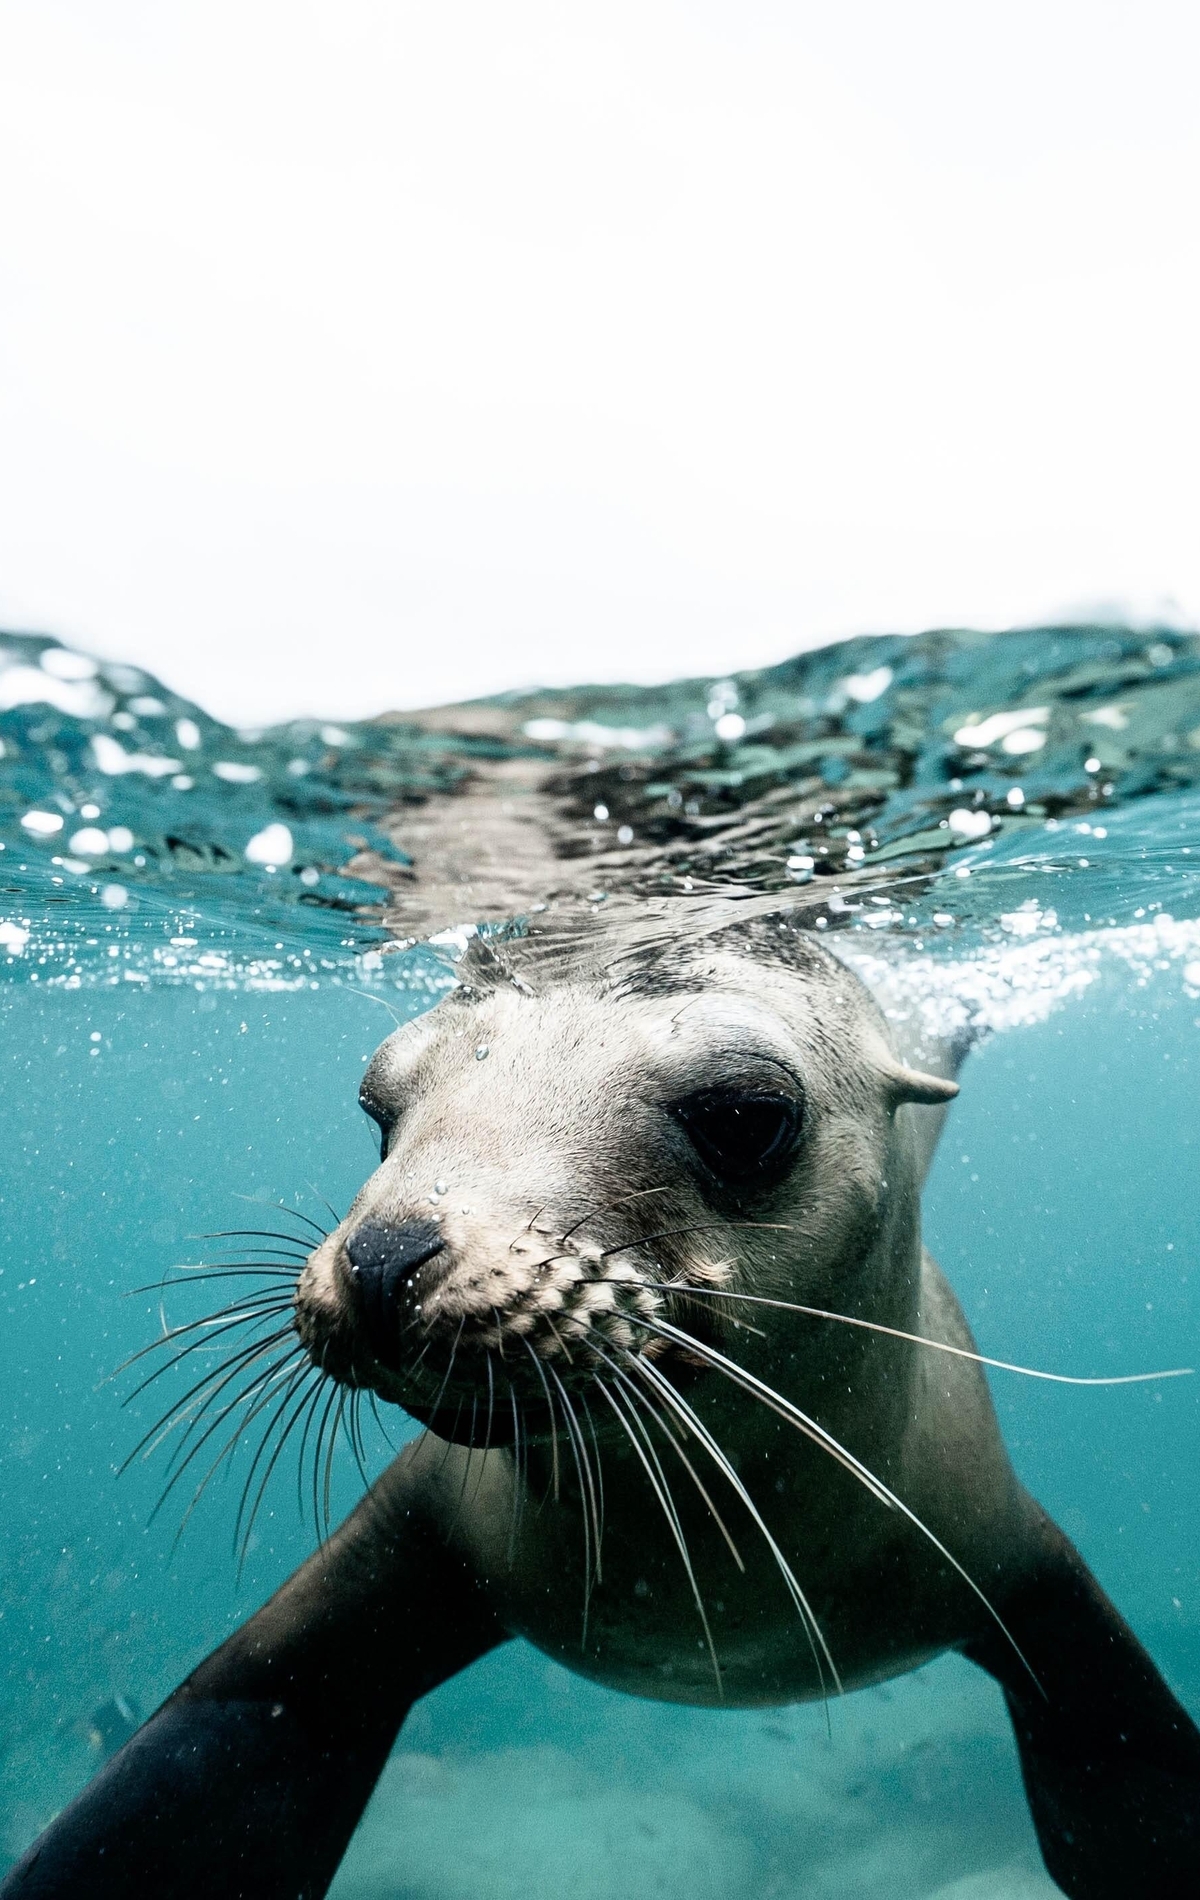 Картинка: Морской котик, вода, плавает